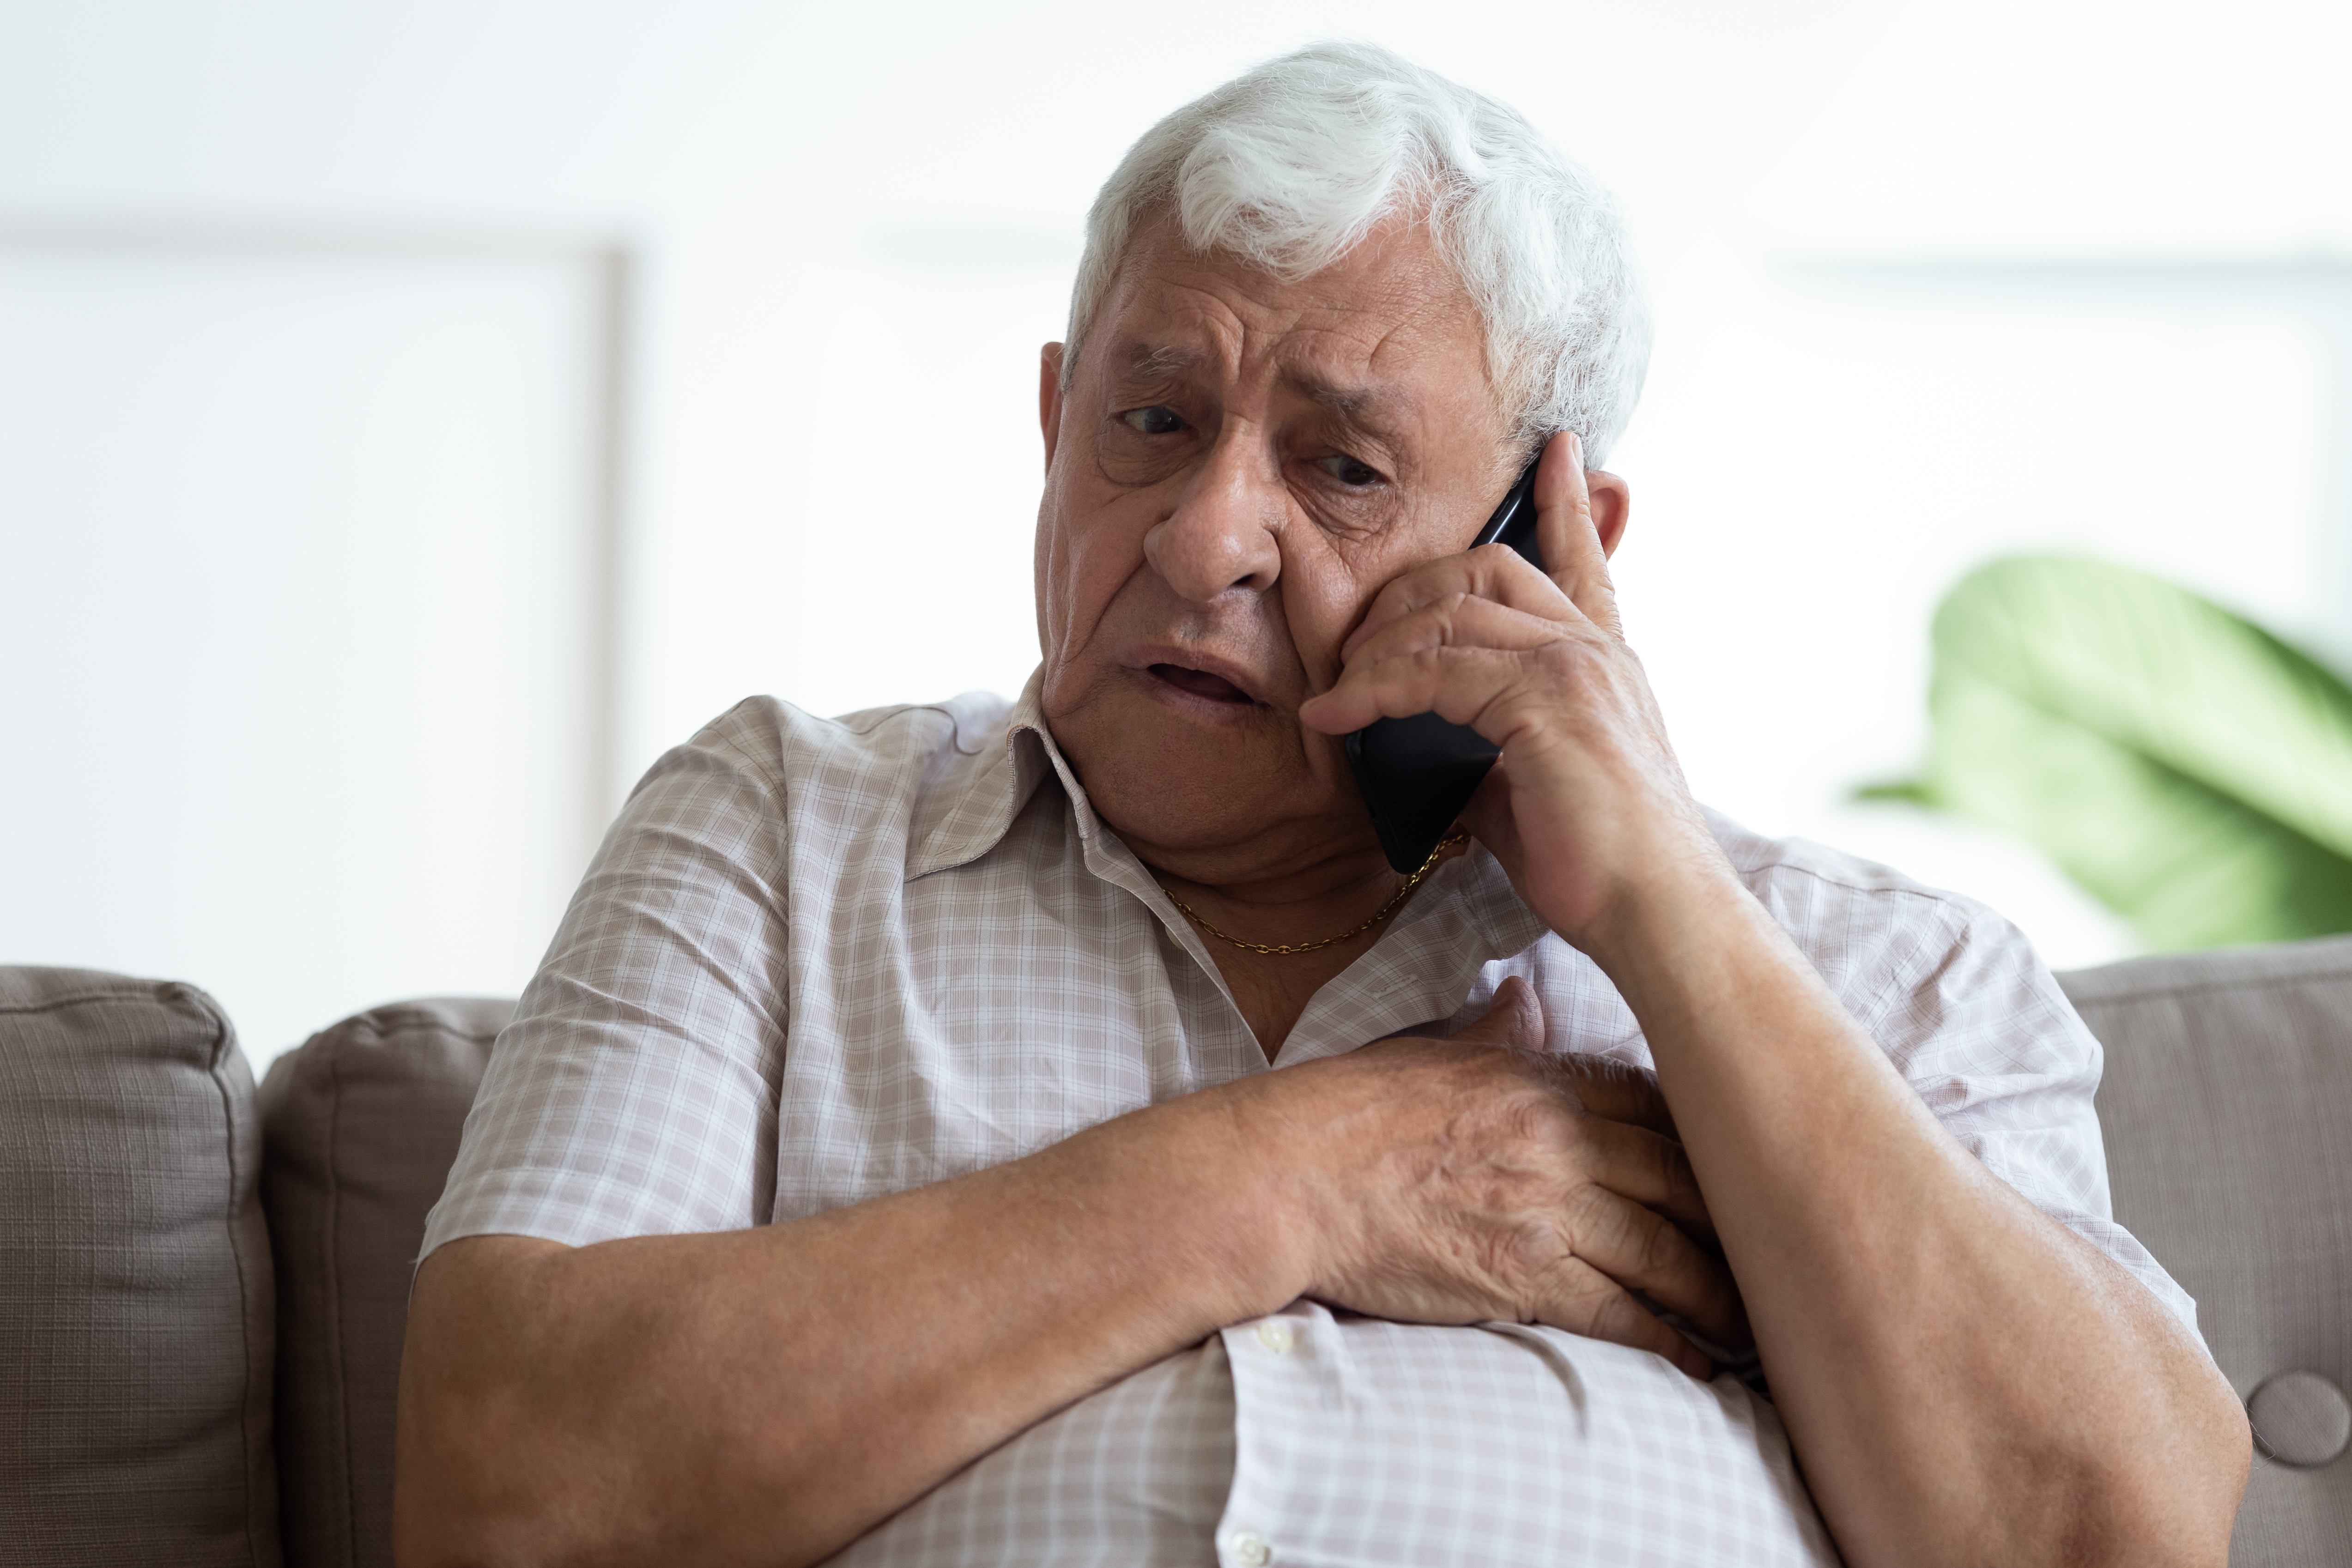 An elderly man on the phone | Source: Shutterstock